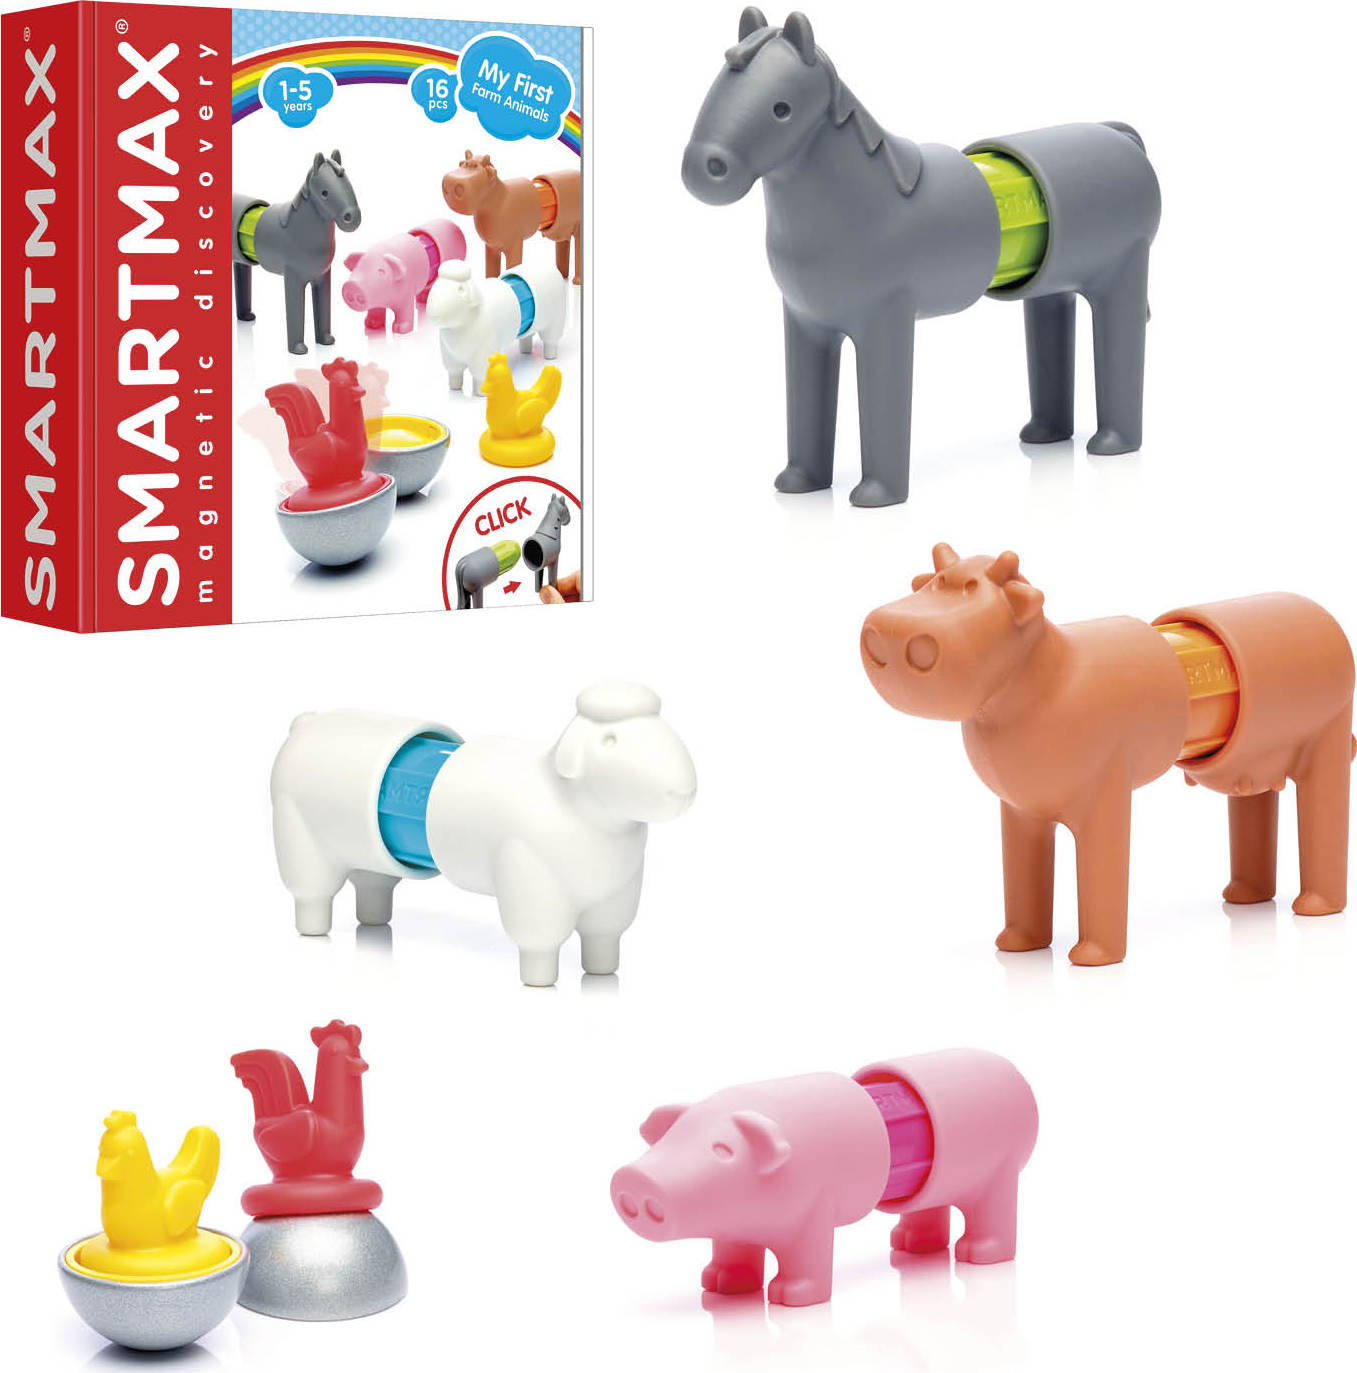 SmartMax Start Set (23 pcs), Educational Toys